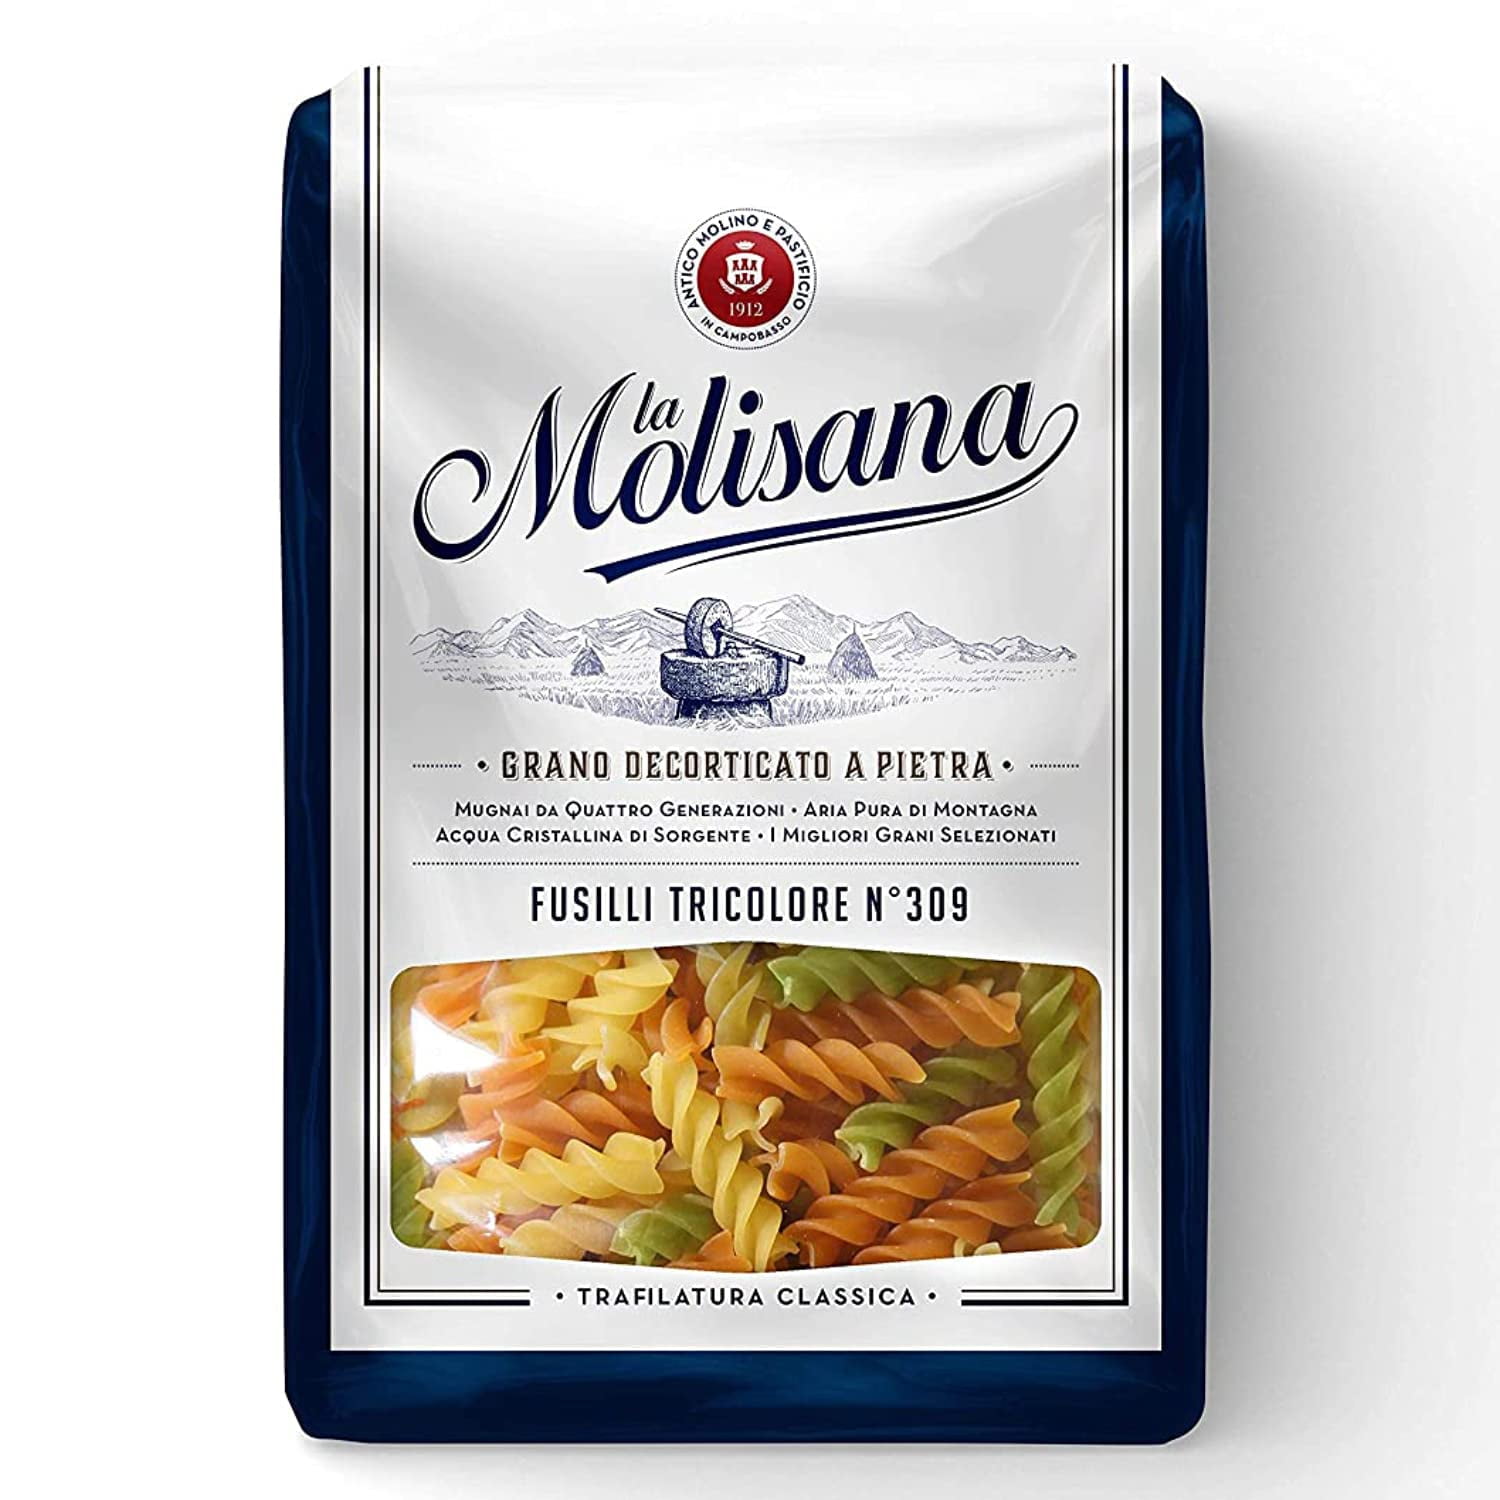 La Molisana Fusilli Tricolor N°309 Durum Wheat Semolina Pasta, 17.64 Oz / 1.1  Lbs / 500 G 